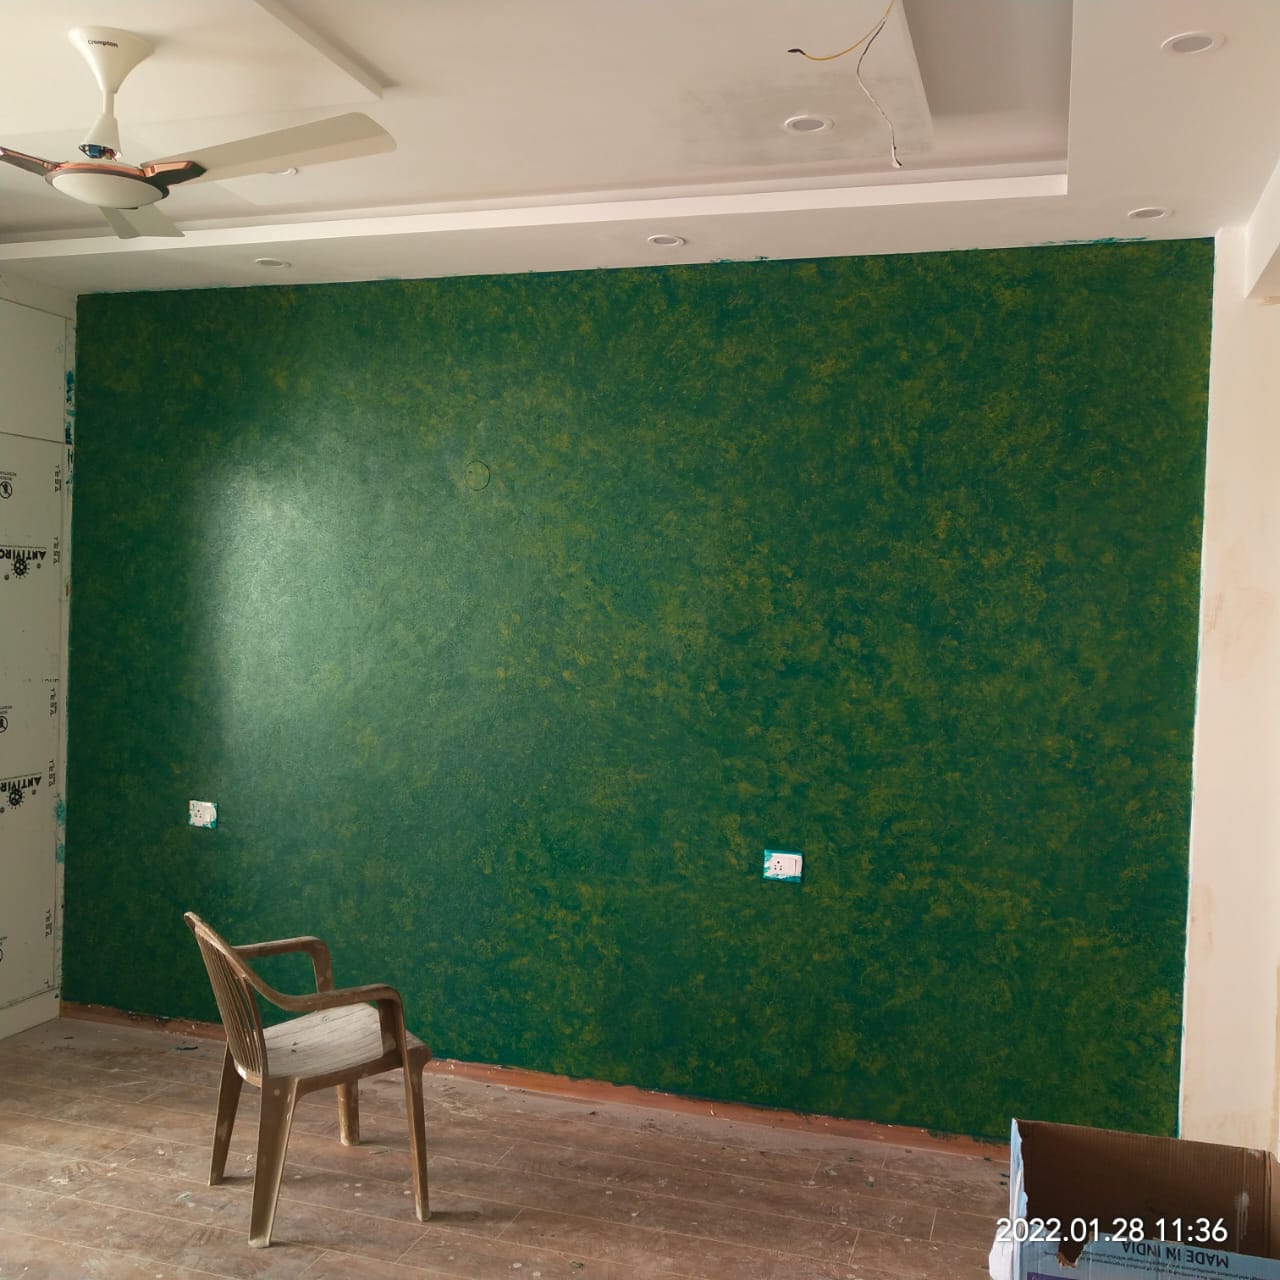 Essence Painters and decorators in gurgaonServicesInterior Designers - ArchitectsGurgaonDLF